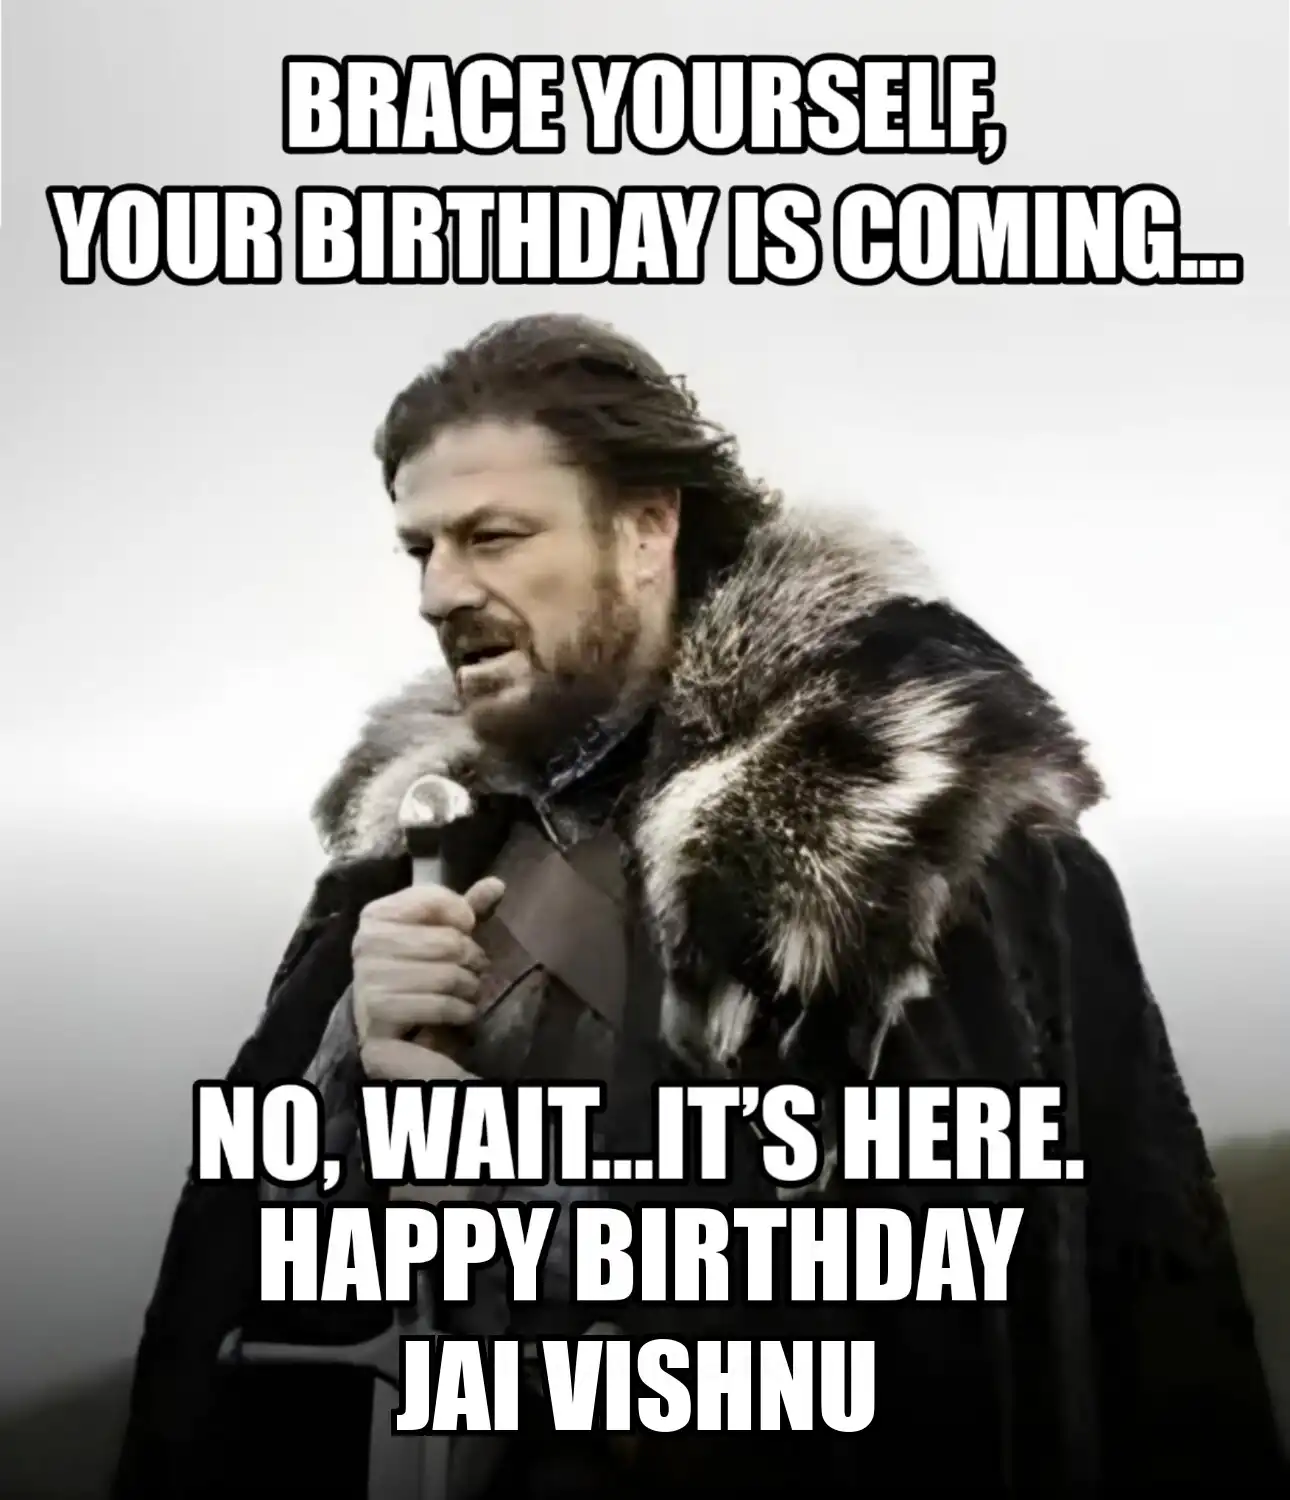 Happy Birthday Jai vishnu Brace Yourself Your Birthday Is Coming Meme